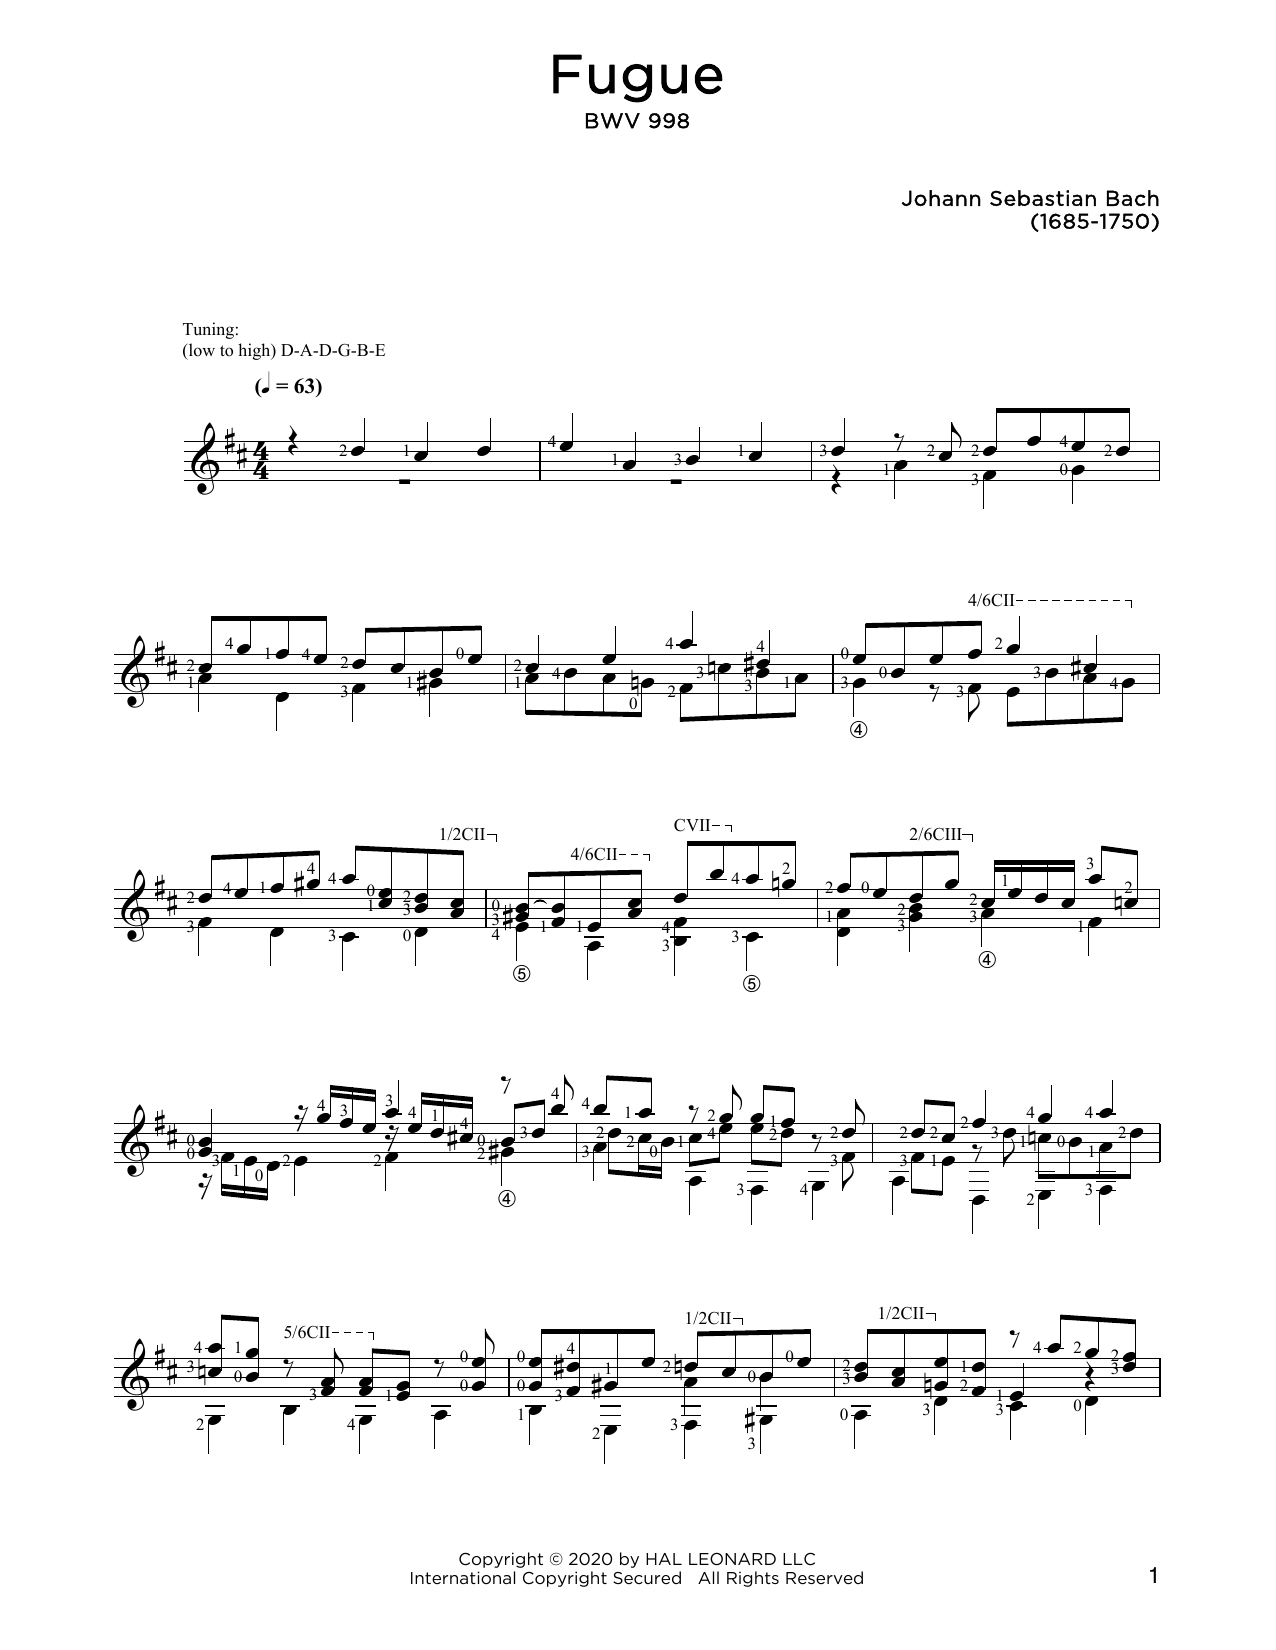 Johann Sebastian Bach Fugue In E-Flat Major, BWV 998 Sheet Music Notes & Chords for Solo Guitar - Download or Print PDF